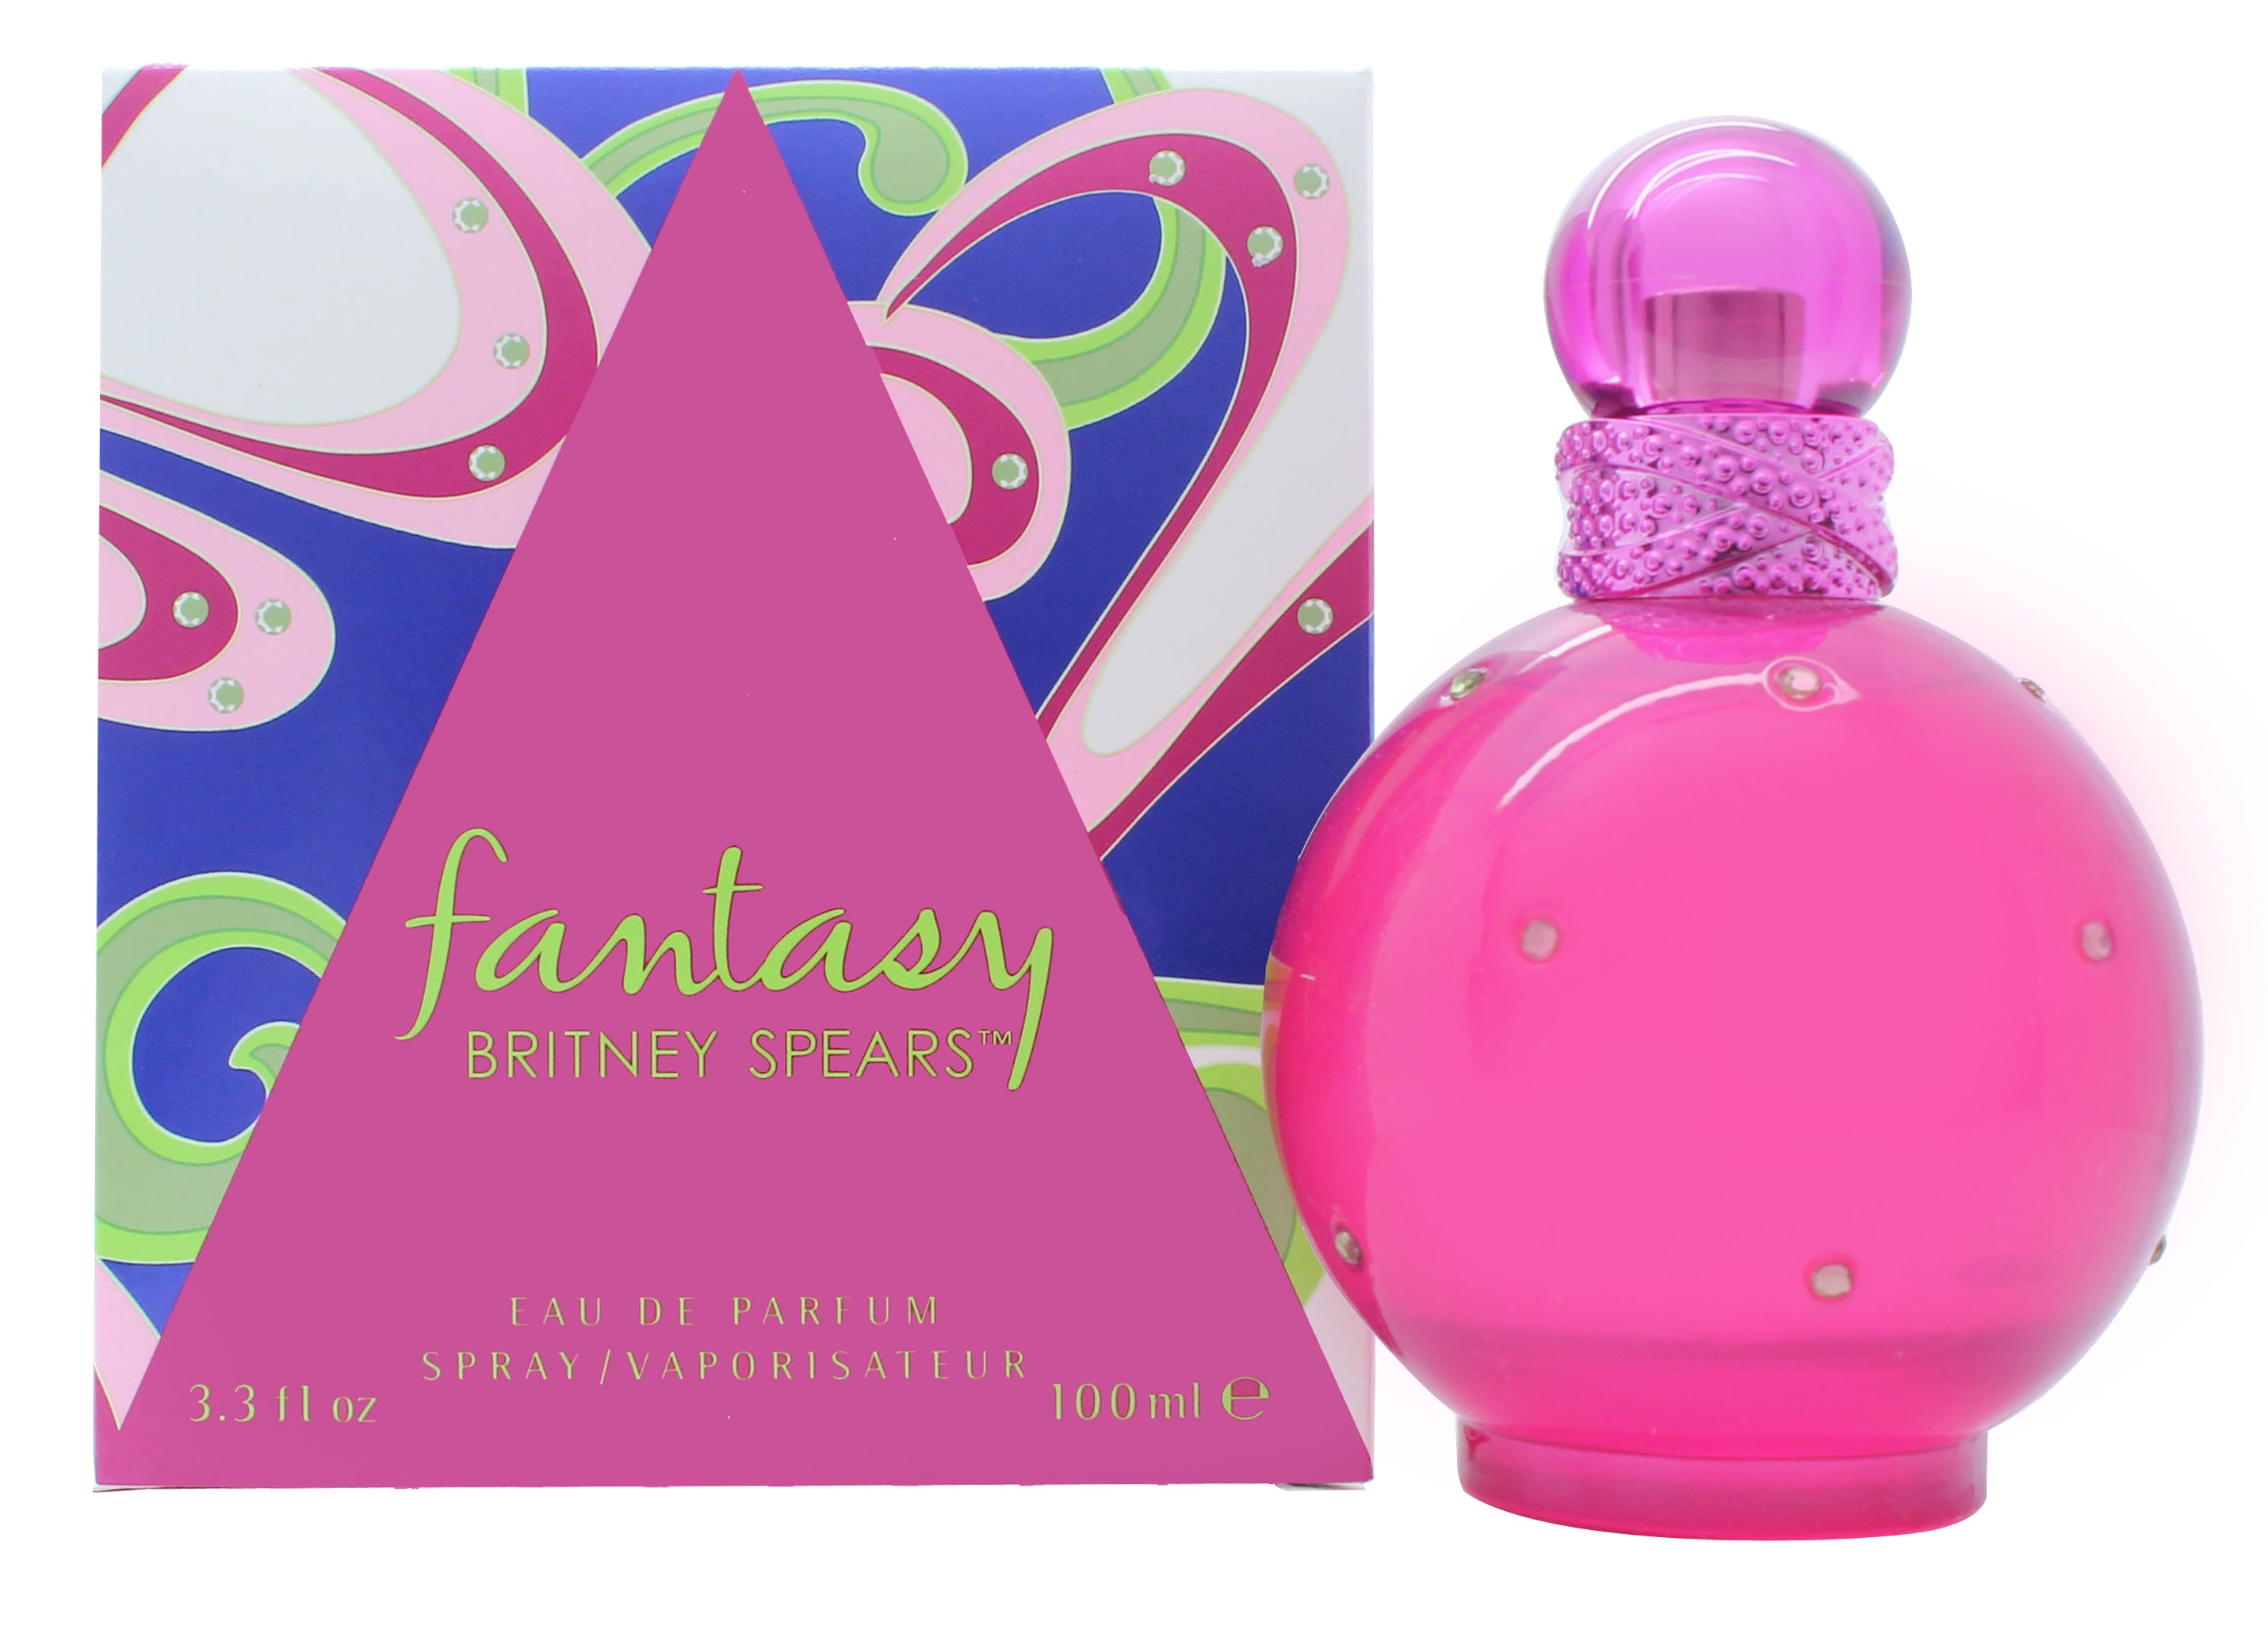 View Britney Spears Fantasy Eau de Parfum 100ml Spray information